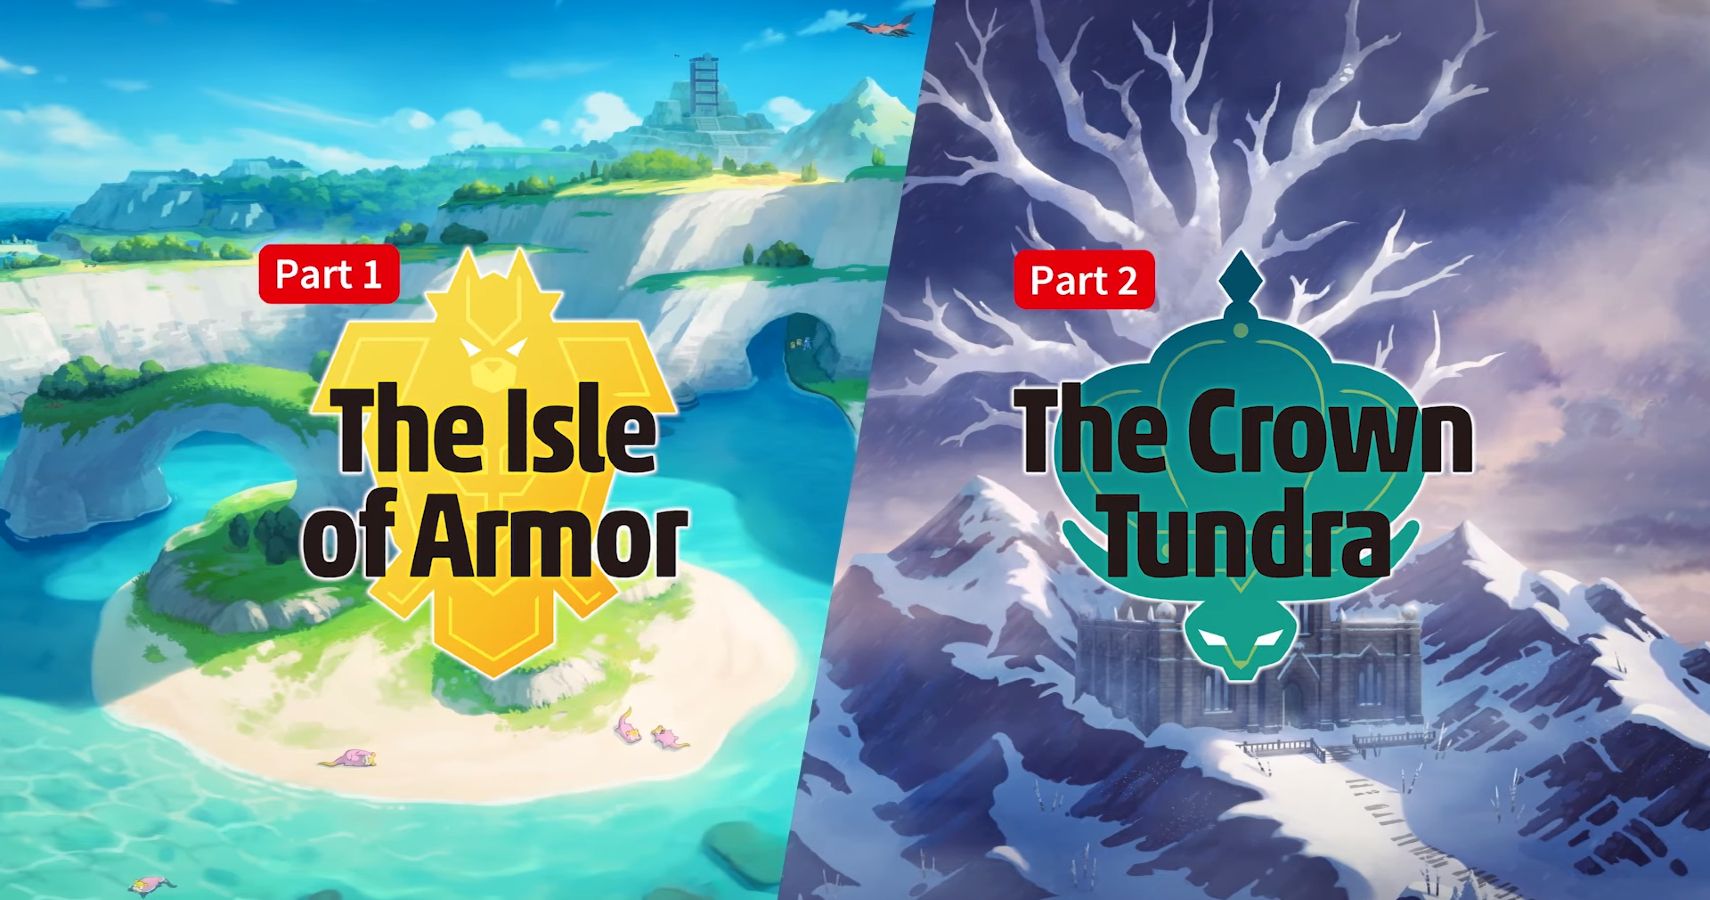 Pokémon Sword & Shield's Crown Tundra DLC gets release date